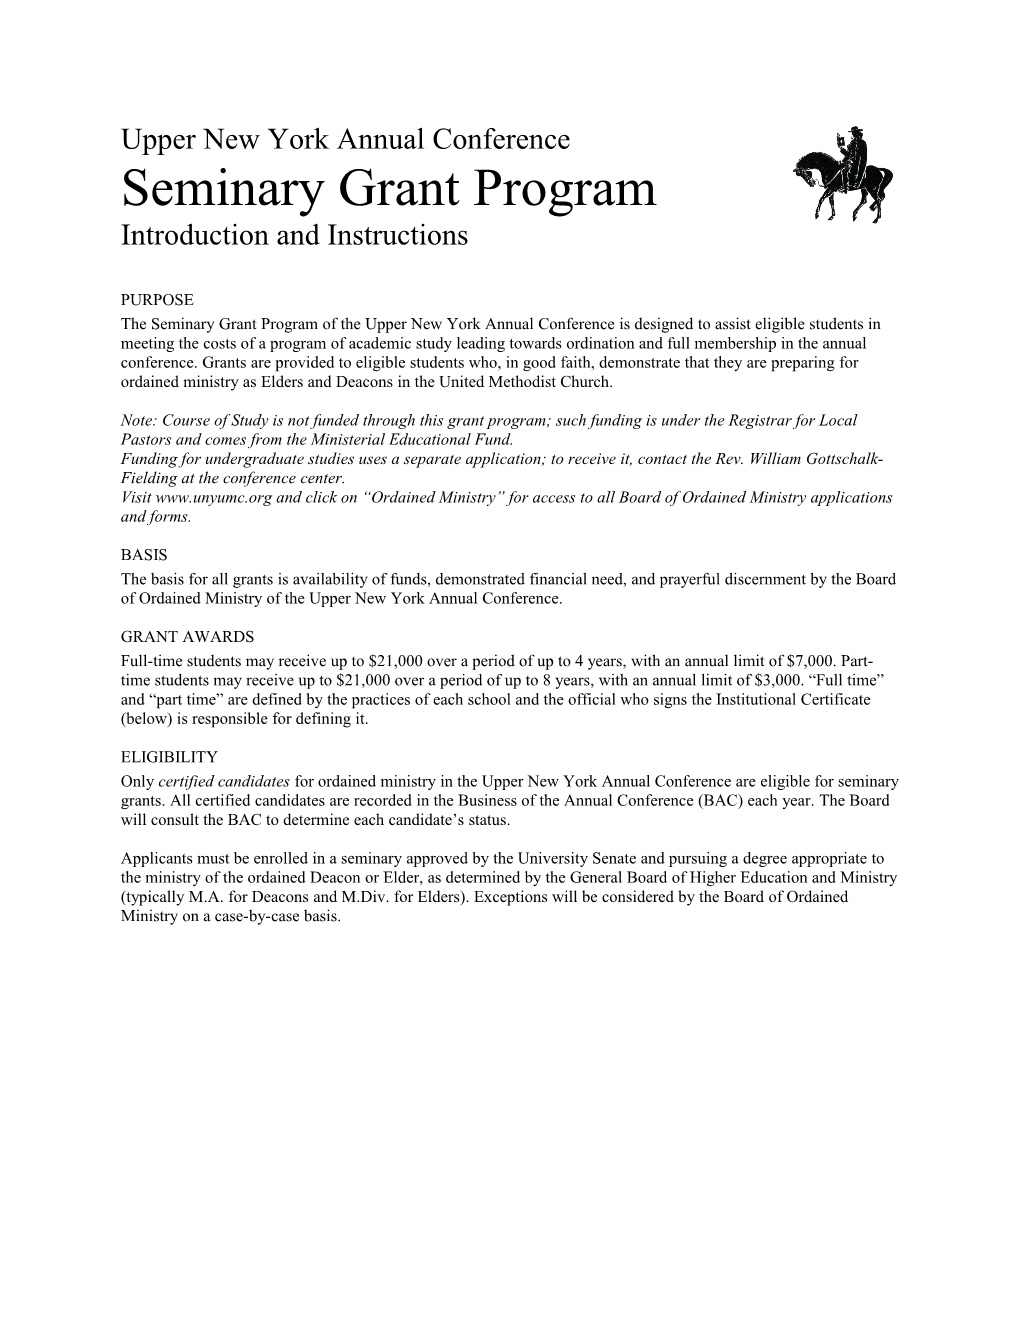 Seminary Grant Program